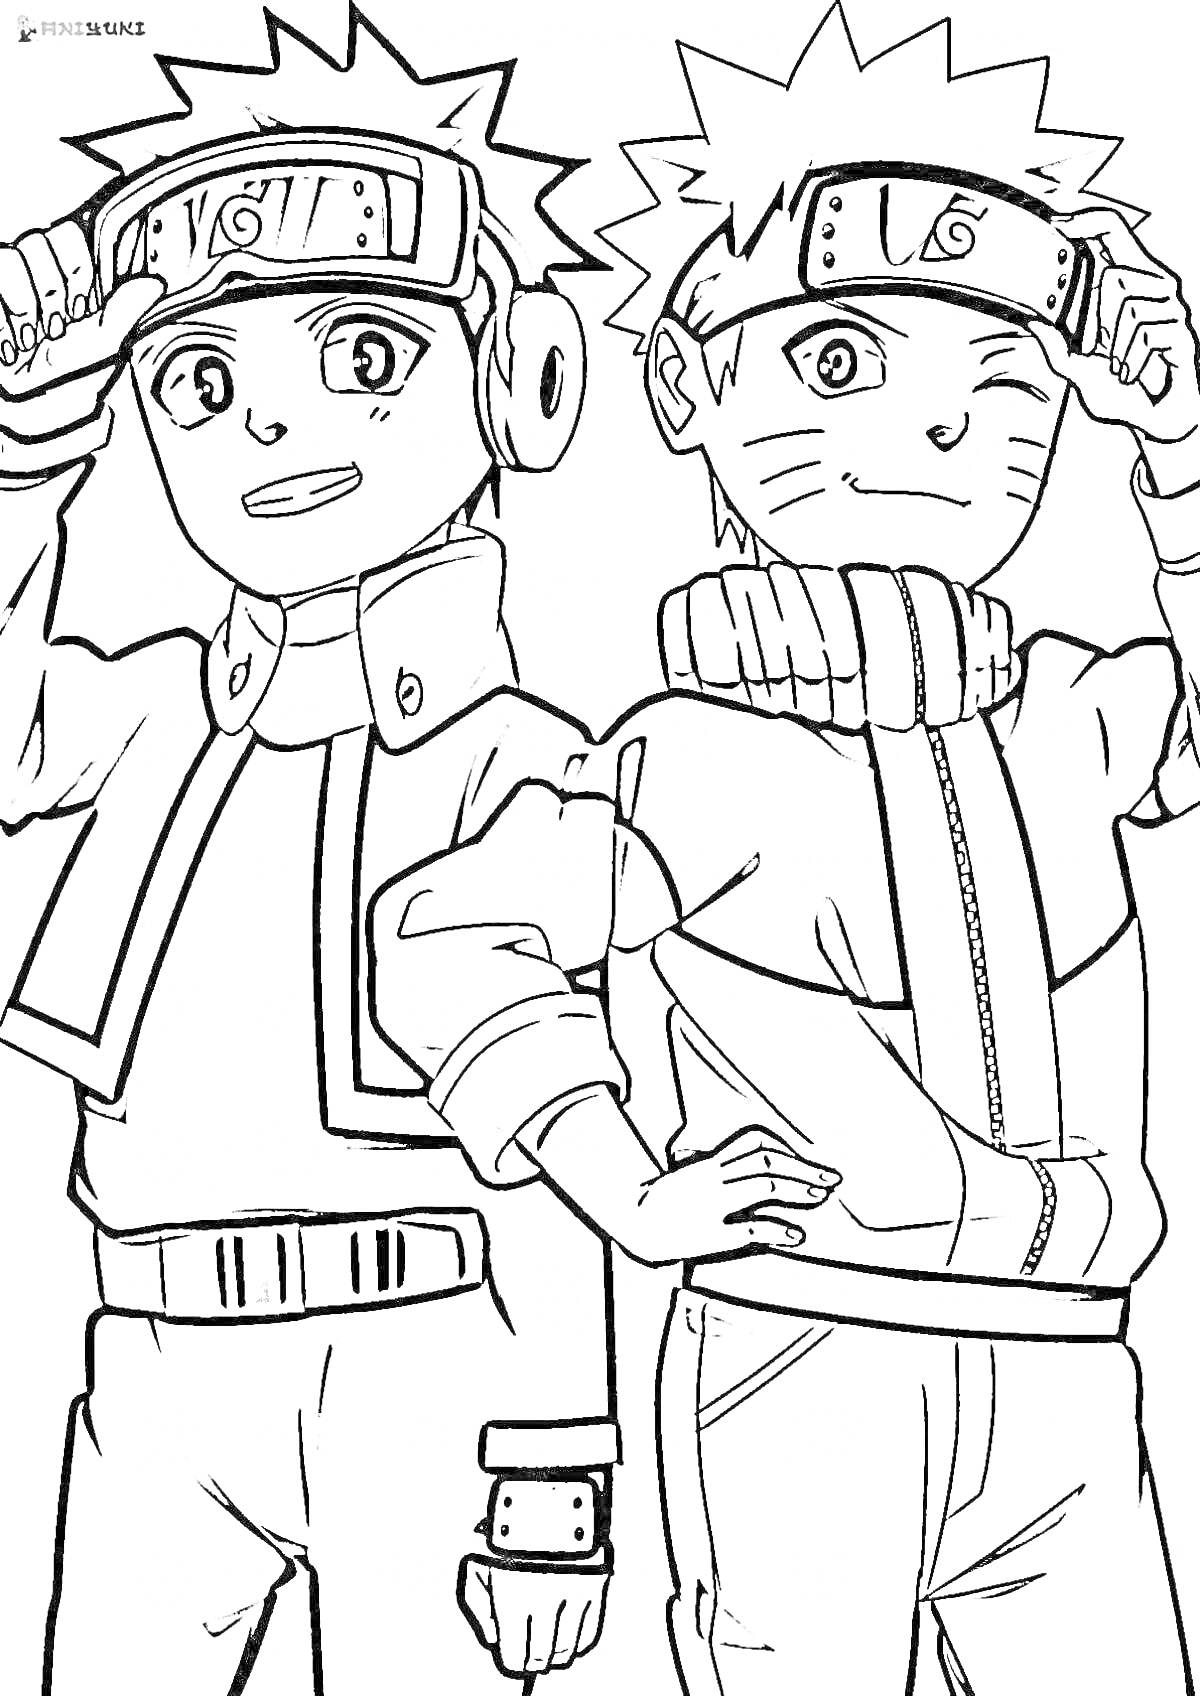 Раскраска Двое персонажей Наруто с повязками на лбу